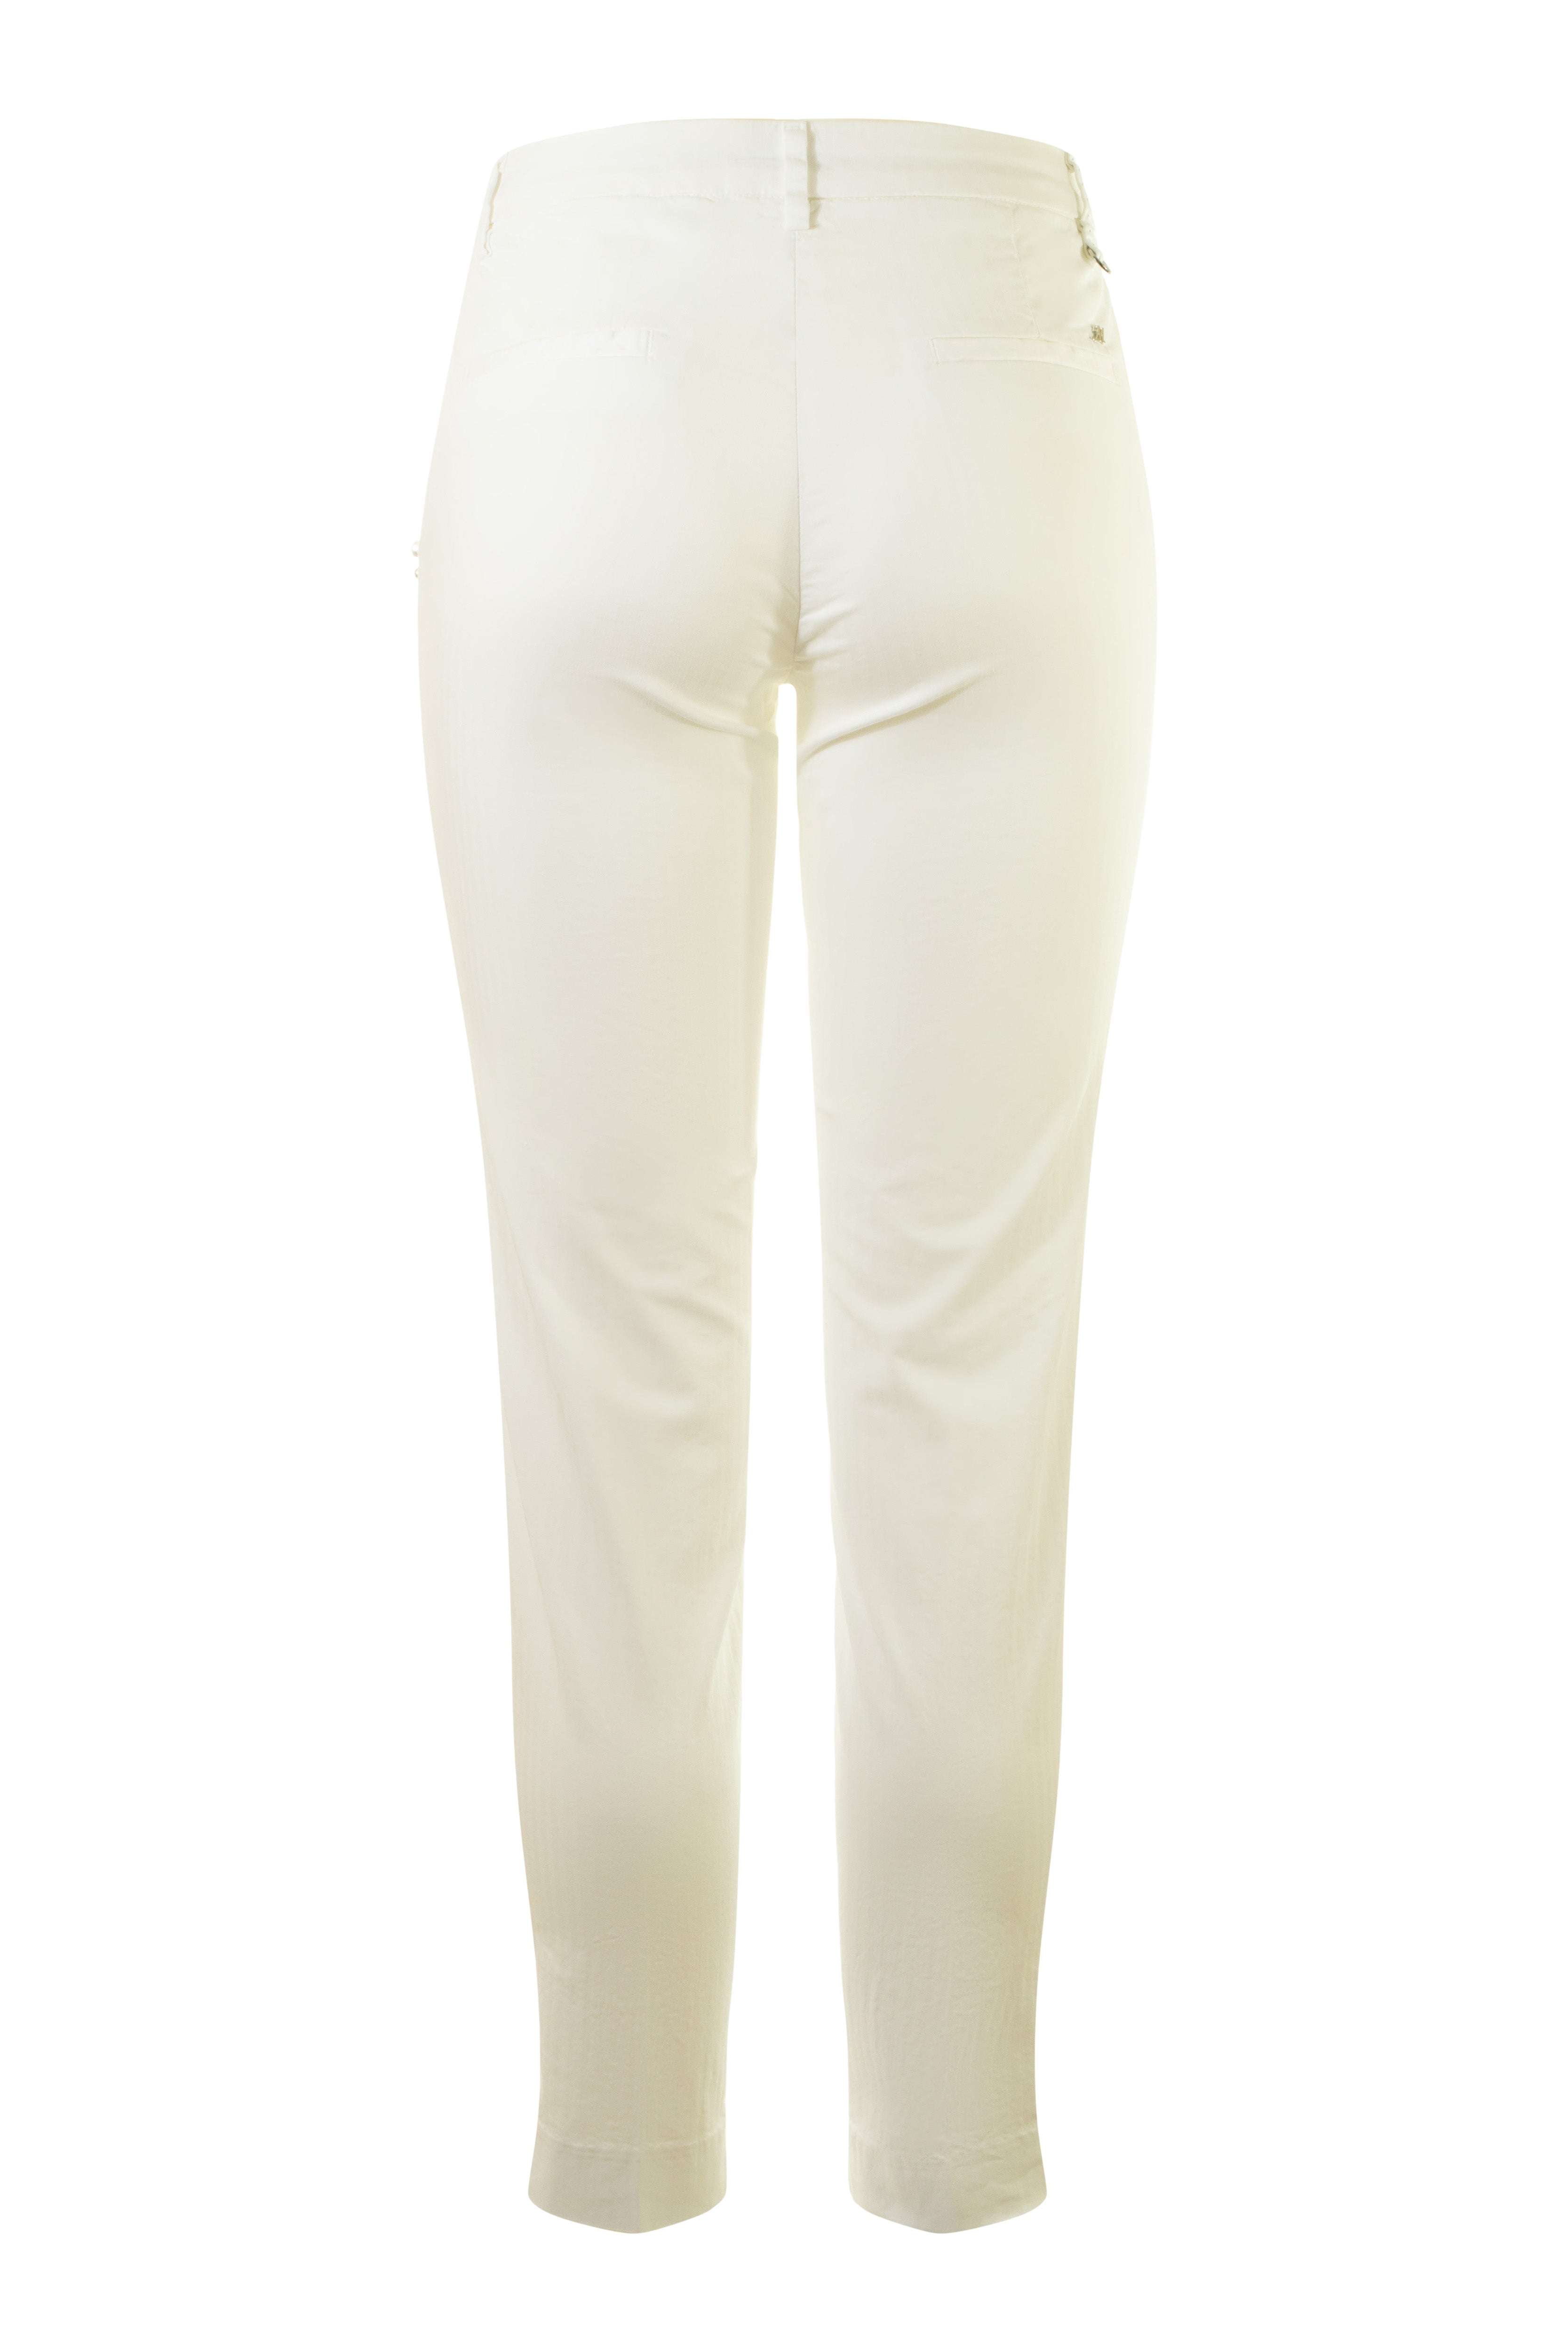 Mason's New York Shadow Stripe Chino Pants in White